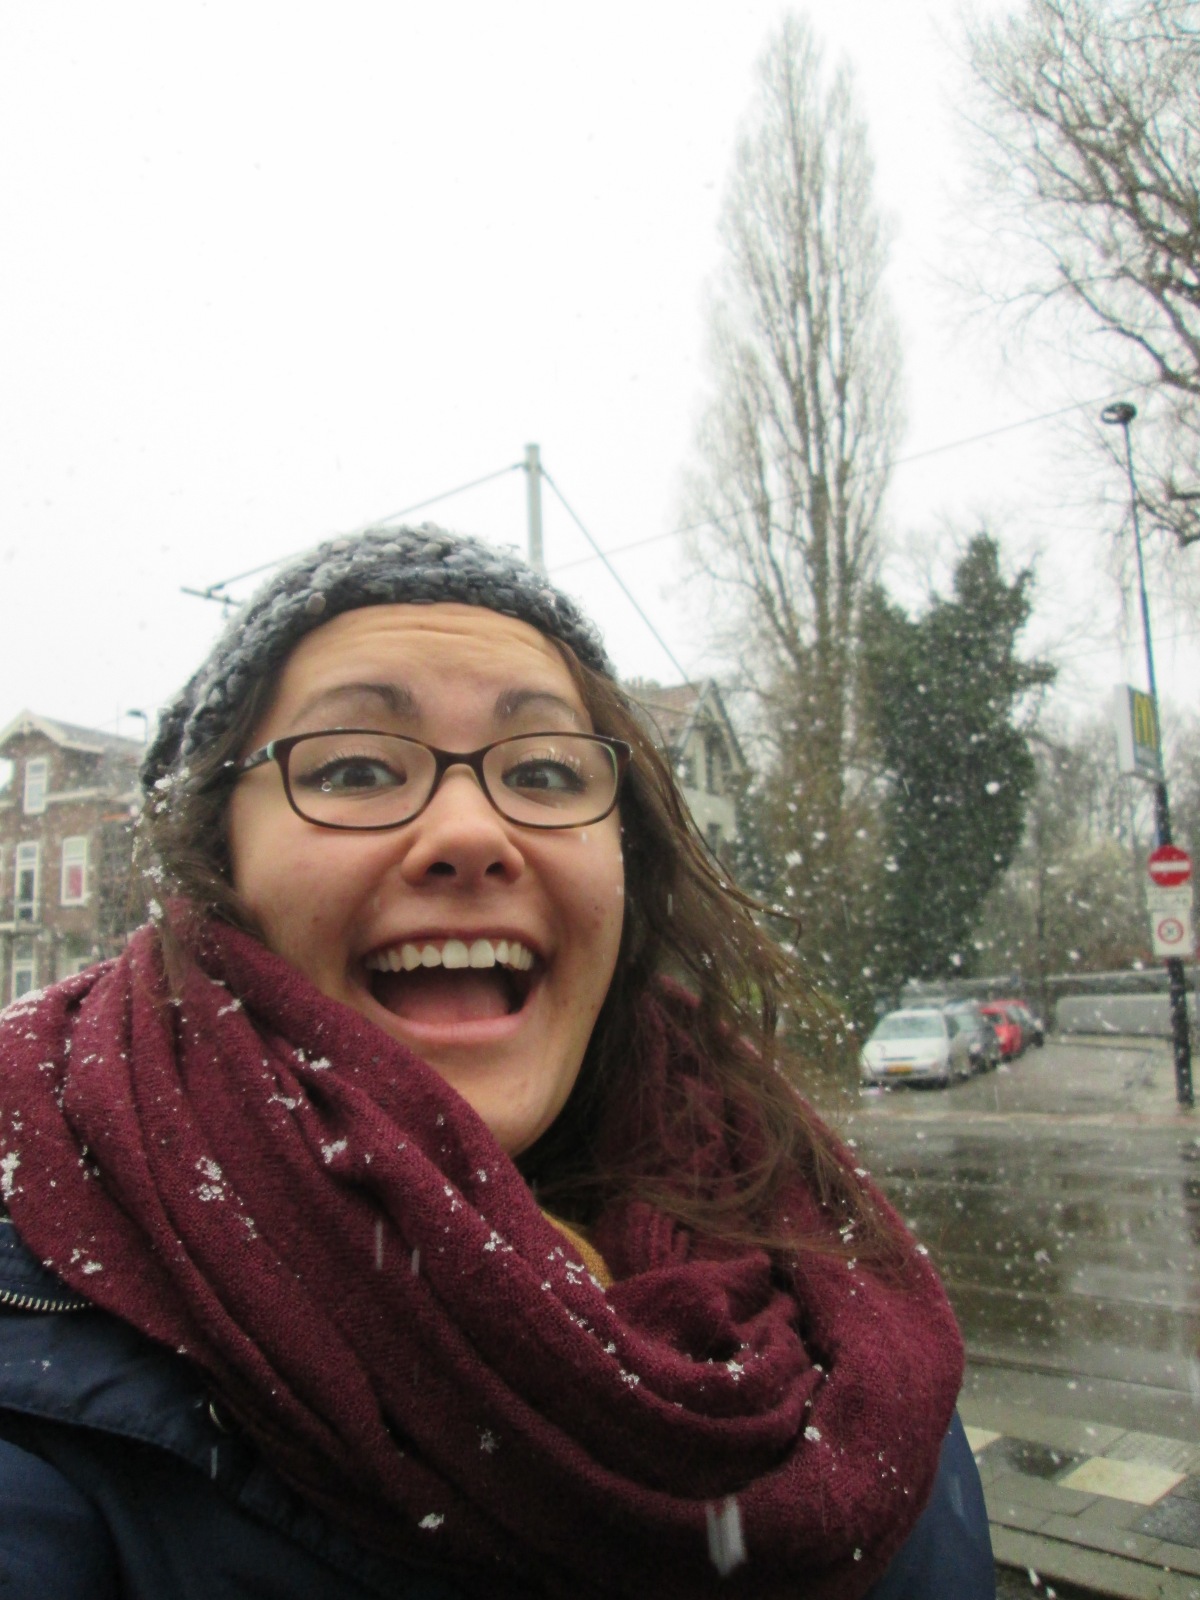 snow in Gouda!